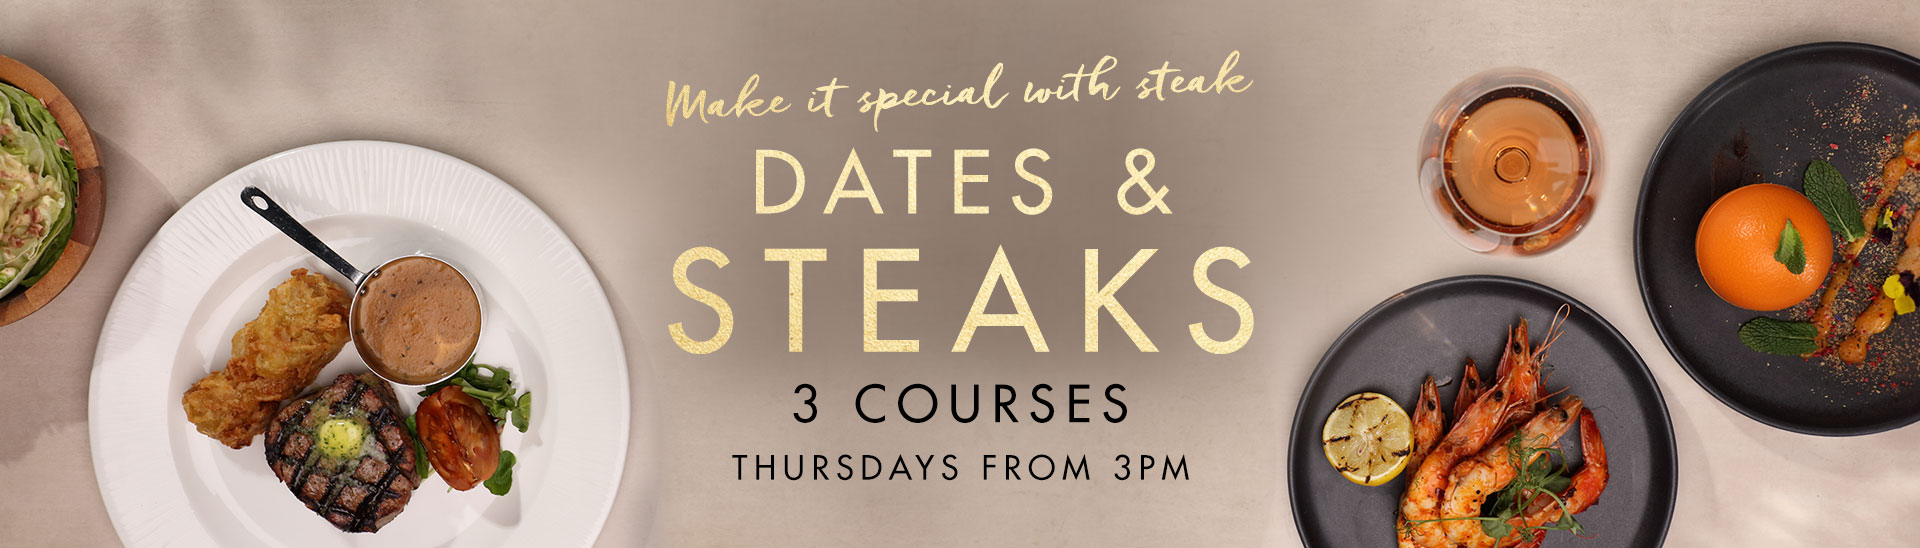 Dates & Steaks at Miller & Carter Bristol City Centre